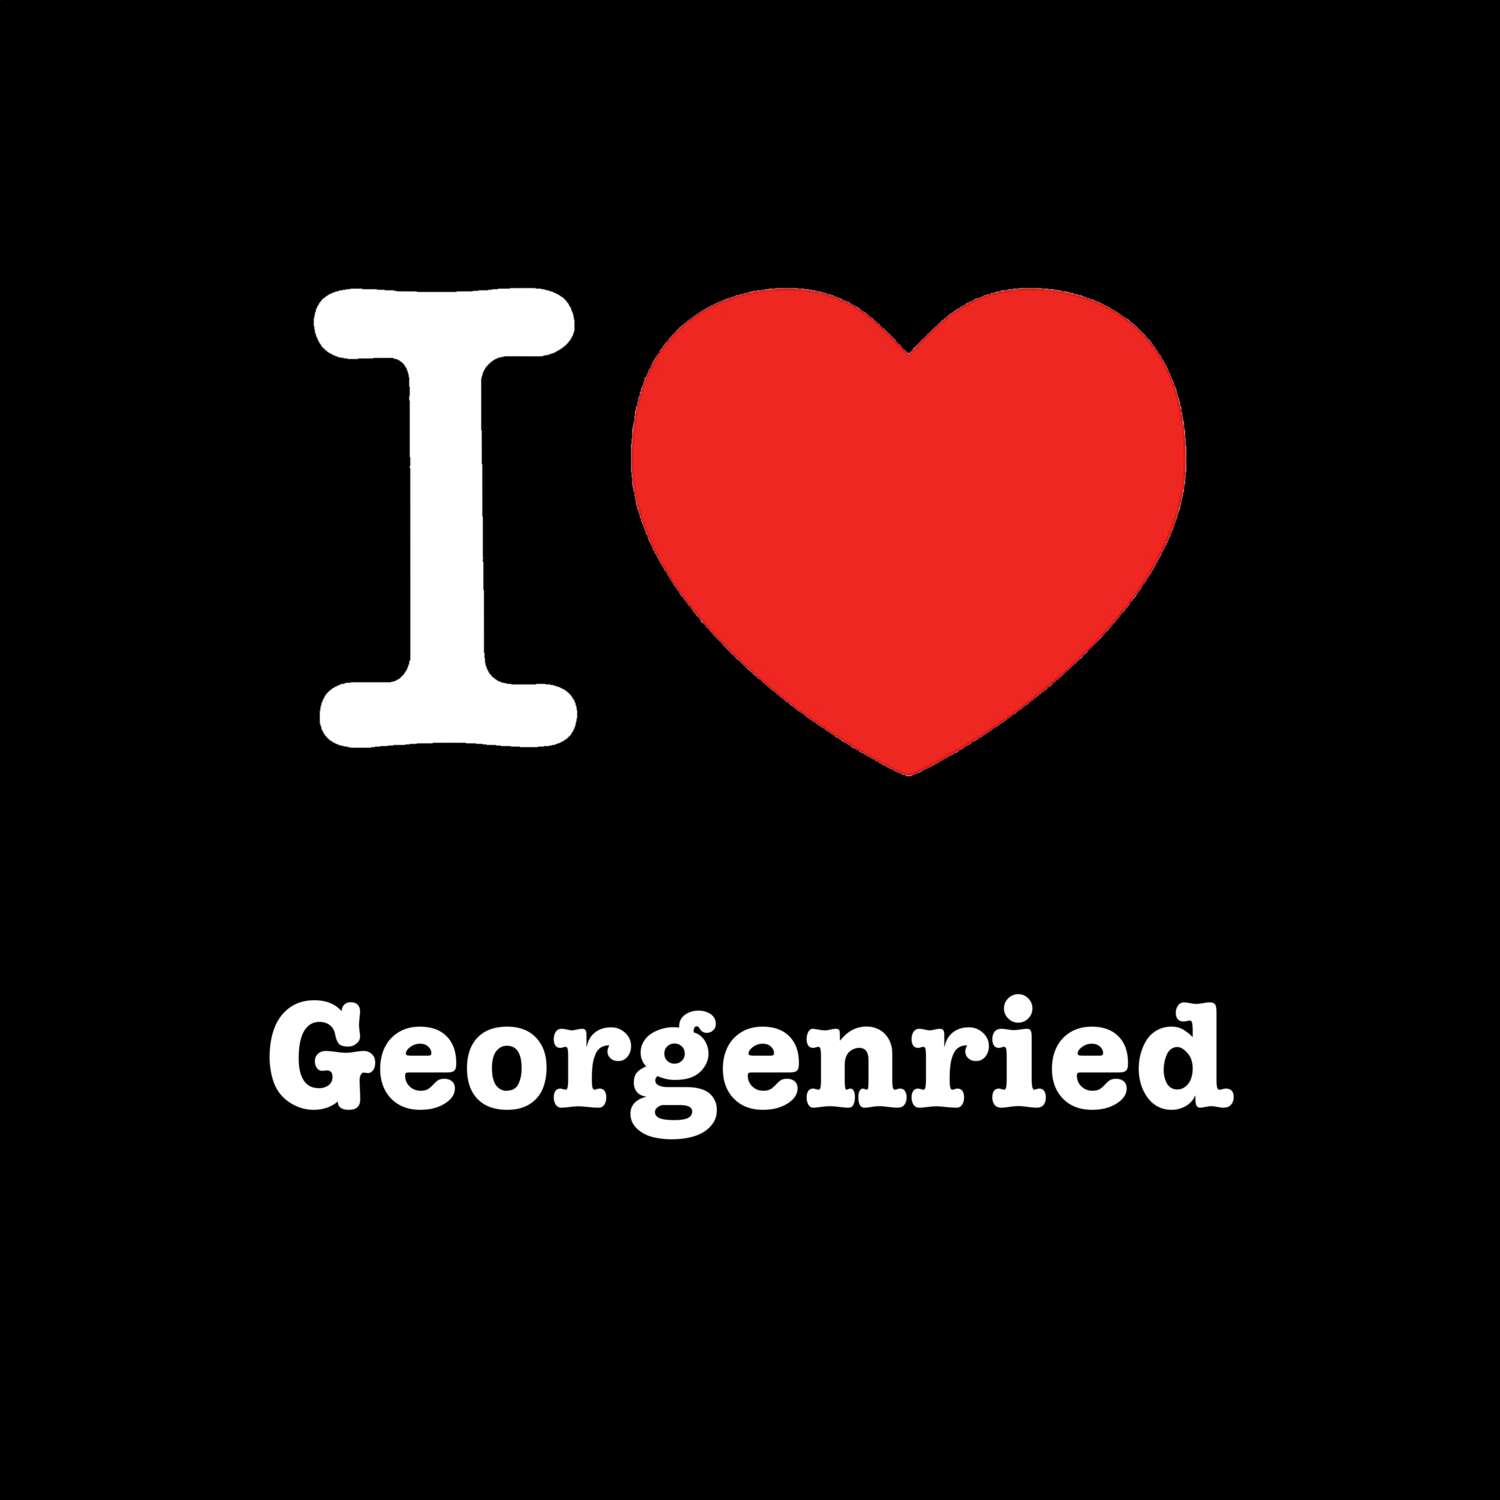 Georgenried T-Shirt »I love«